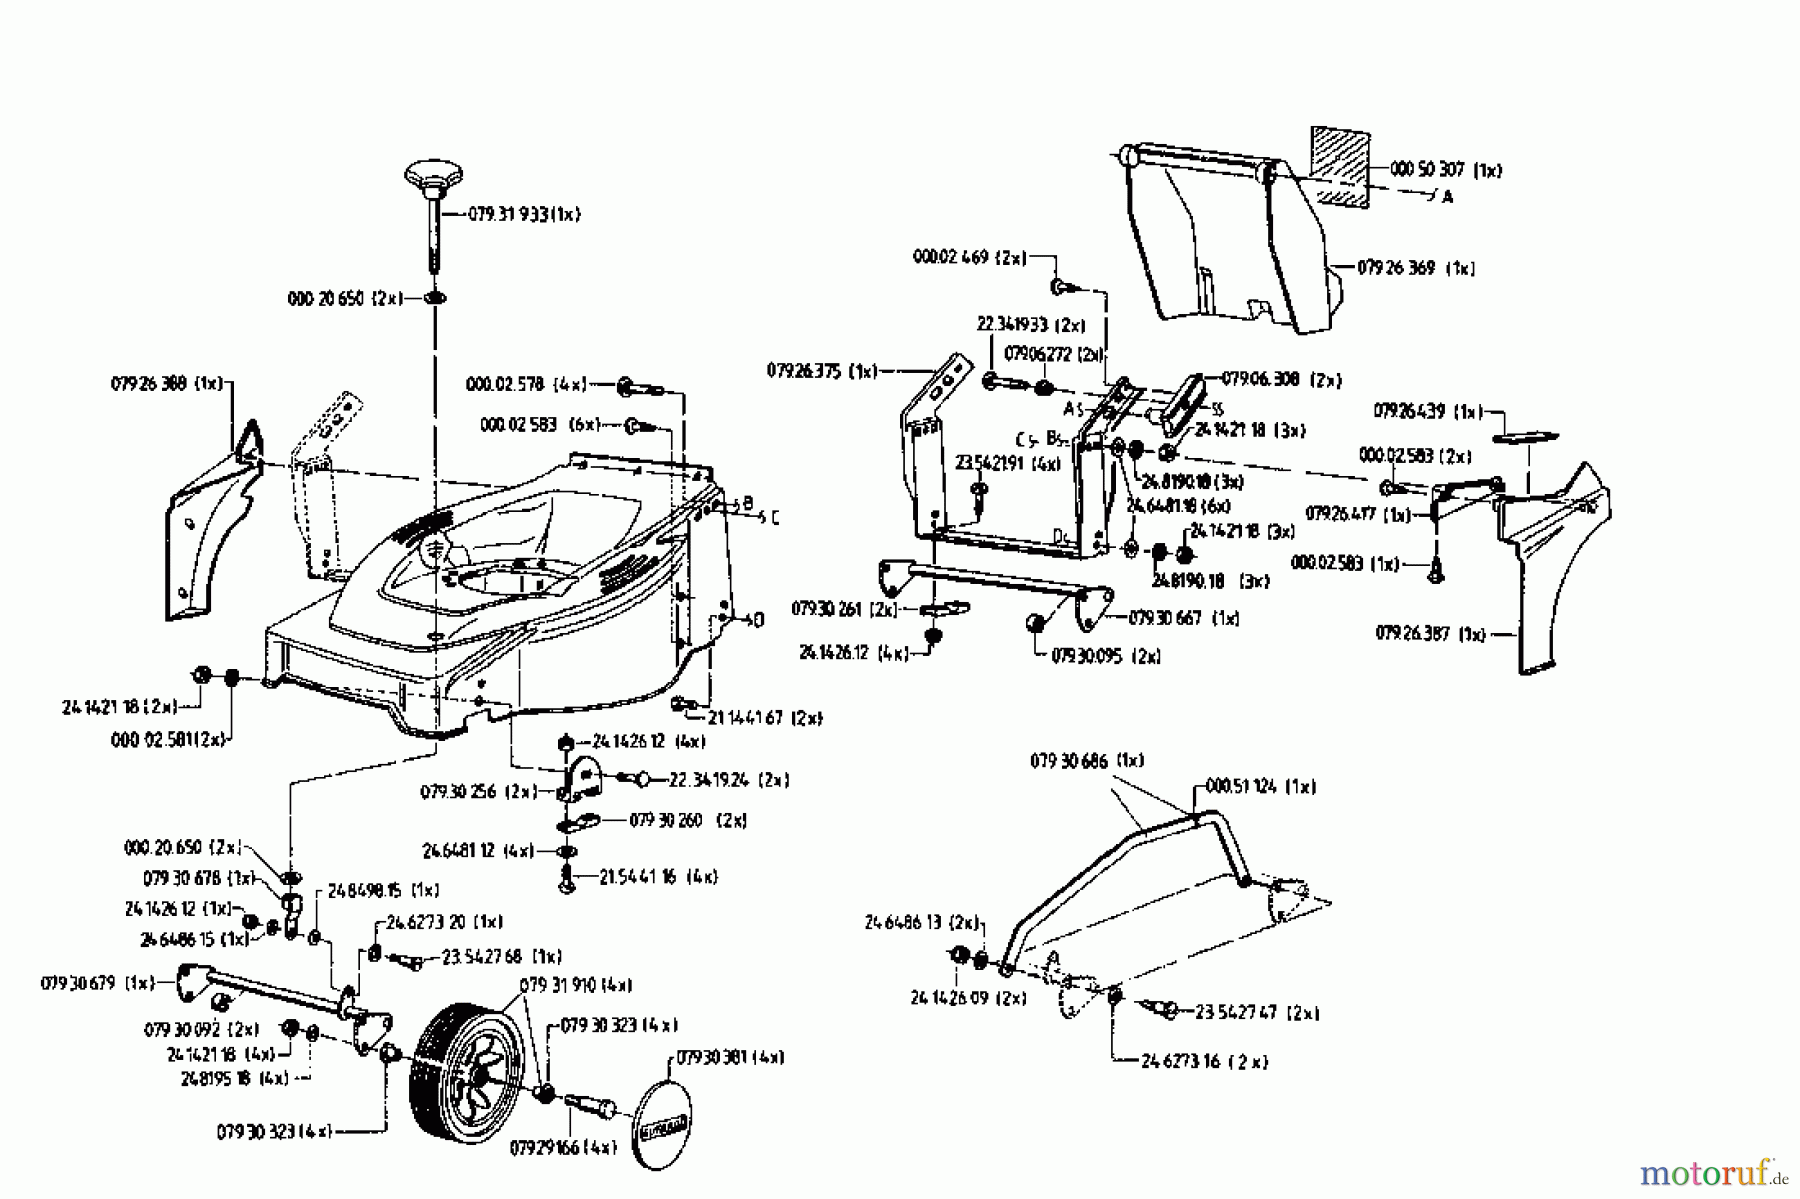  Gutbrod Petrol mower HB 48 L 02814.06  (1996) Basic machine